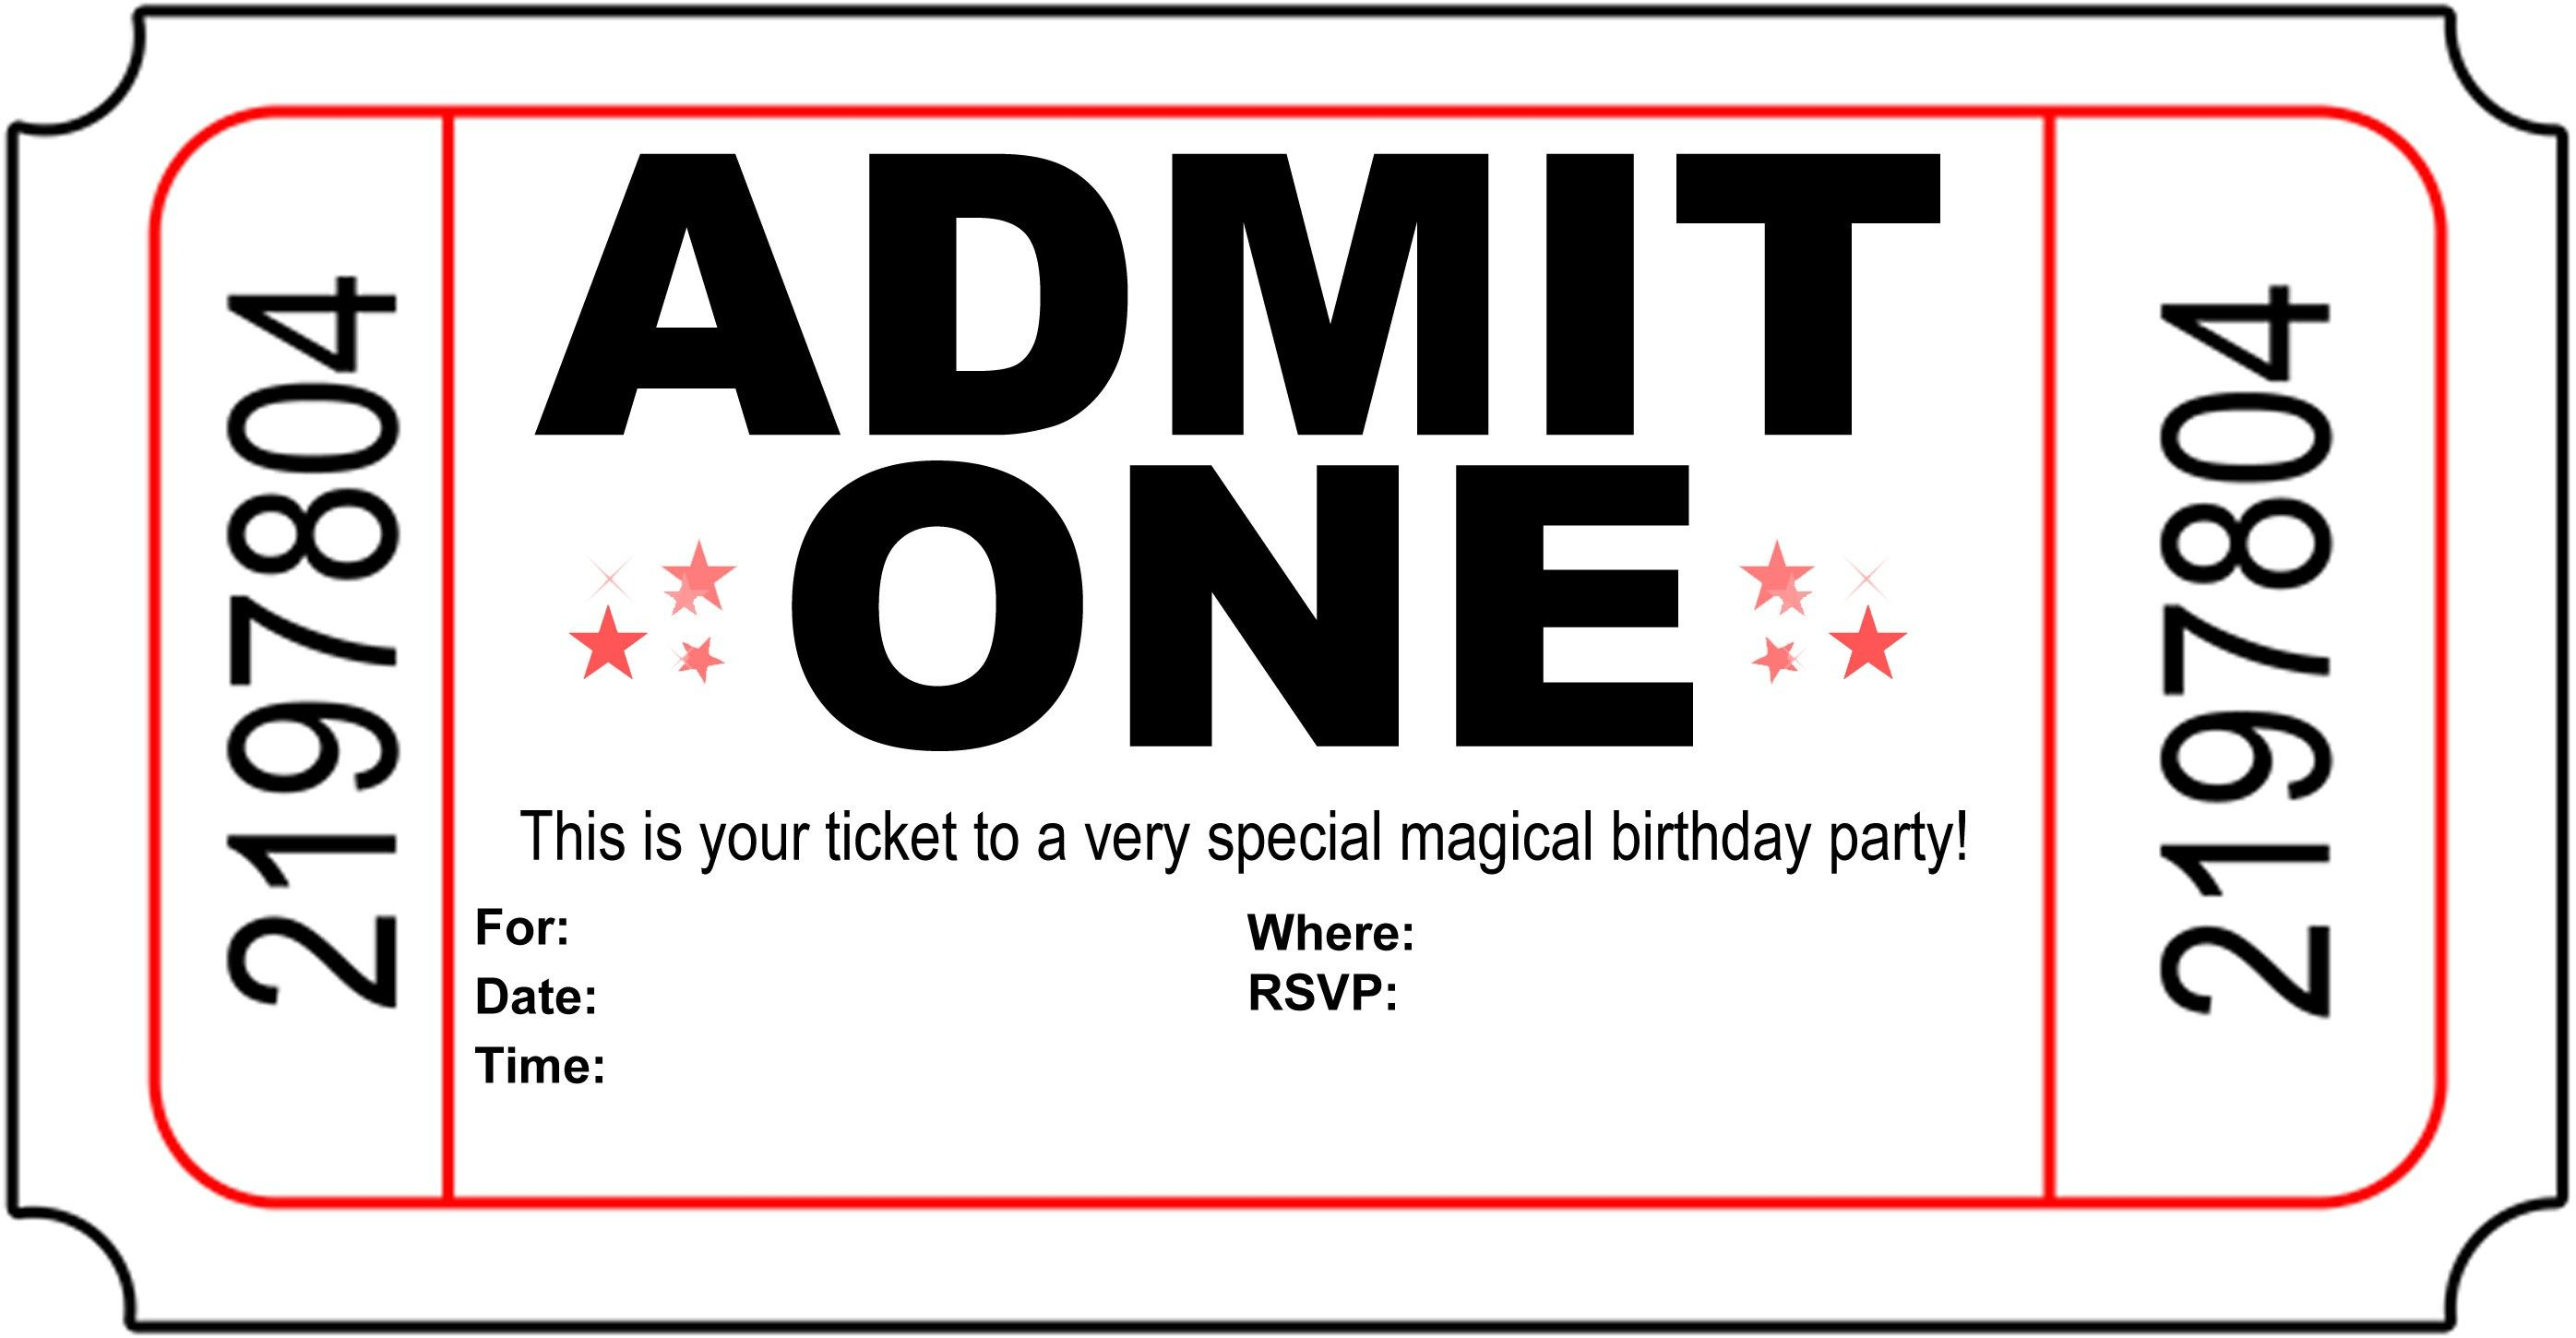 Birthday Party Invitation Free Printable | Printshop. | Pinterest - Free Printable Movie Ticket Birthday Party Invitations